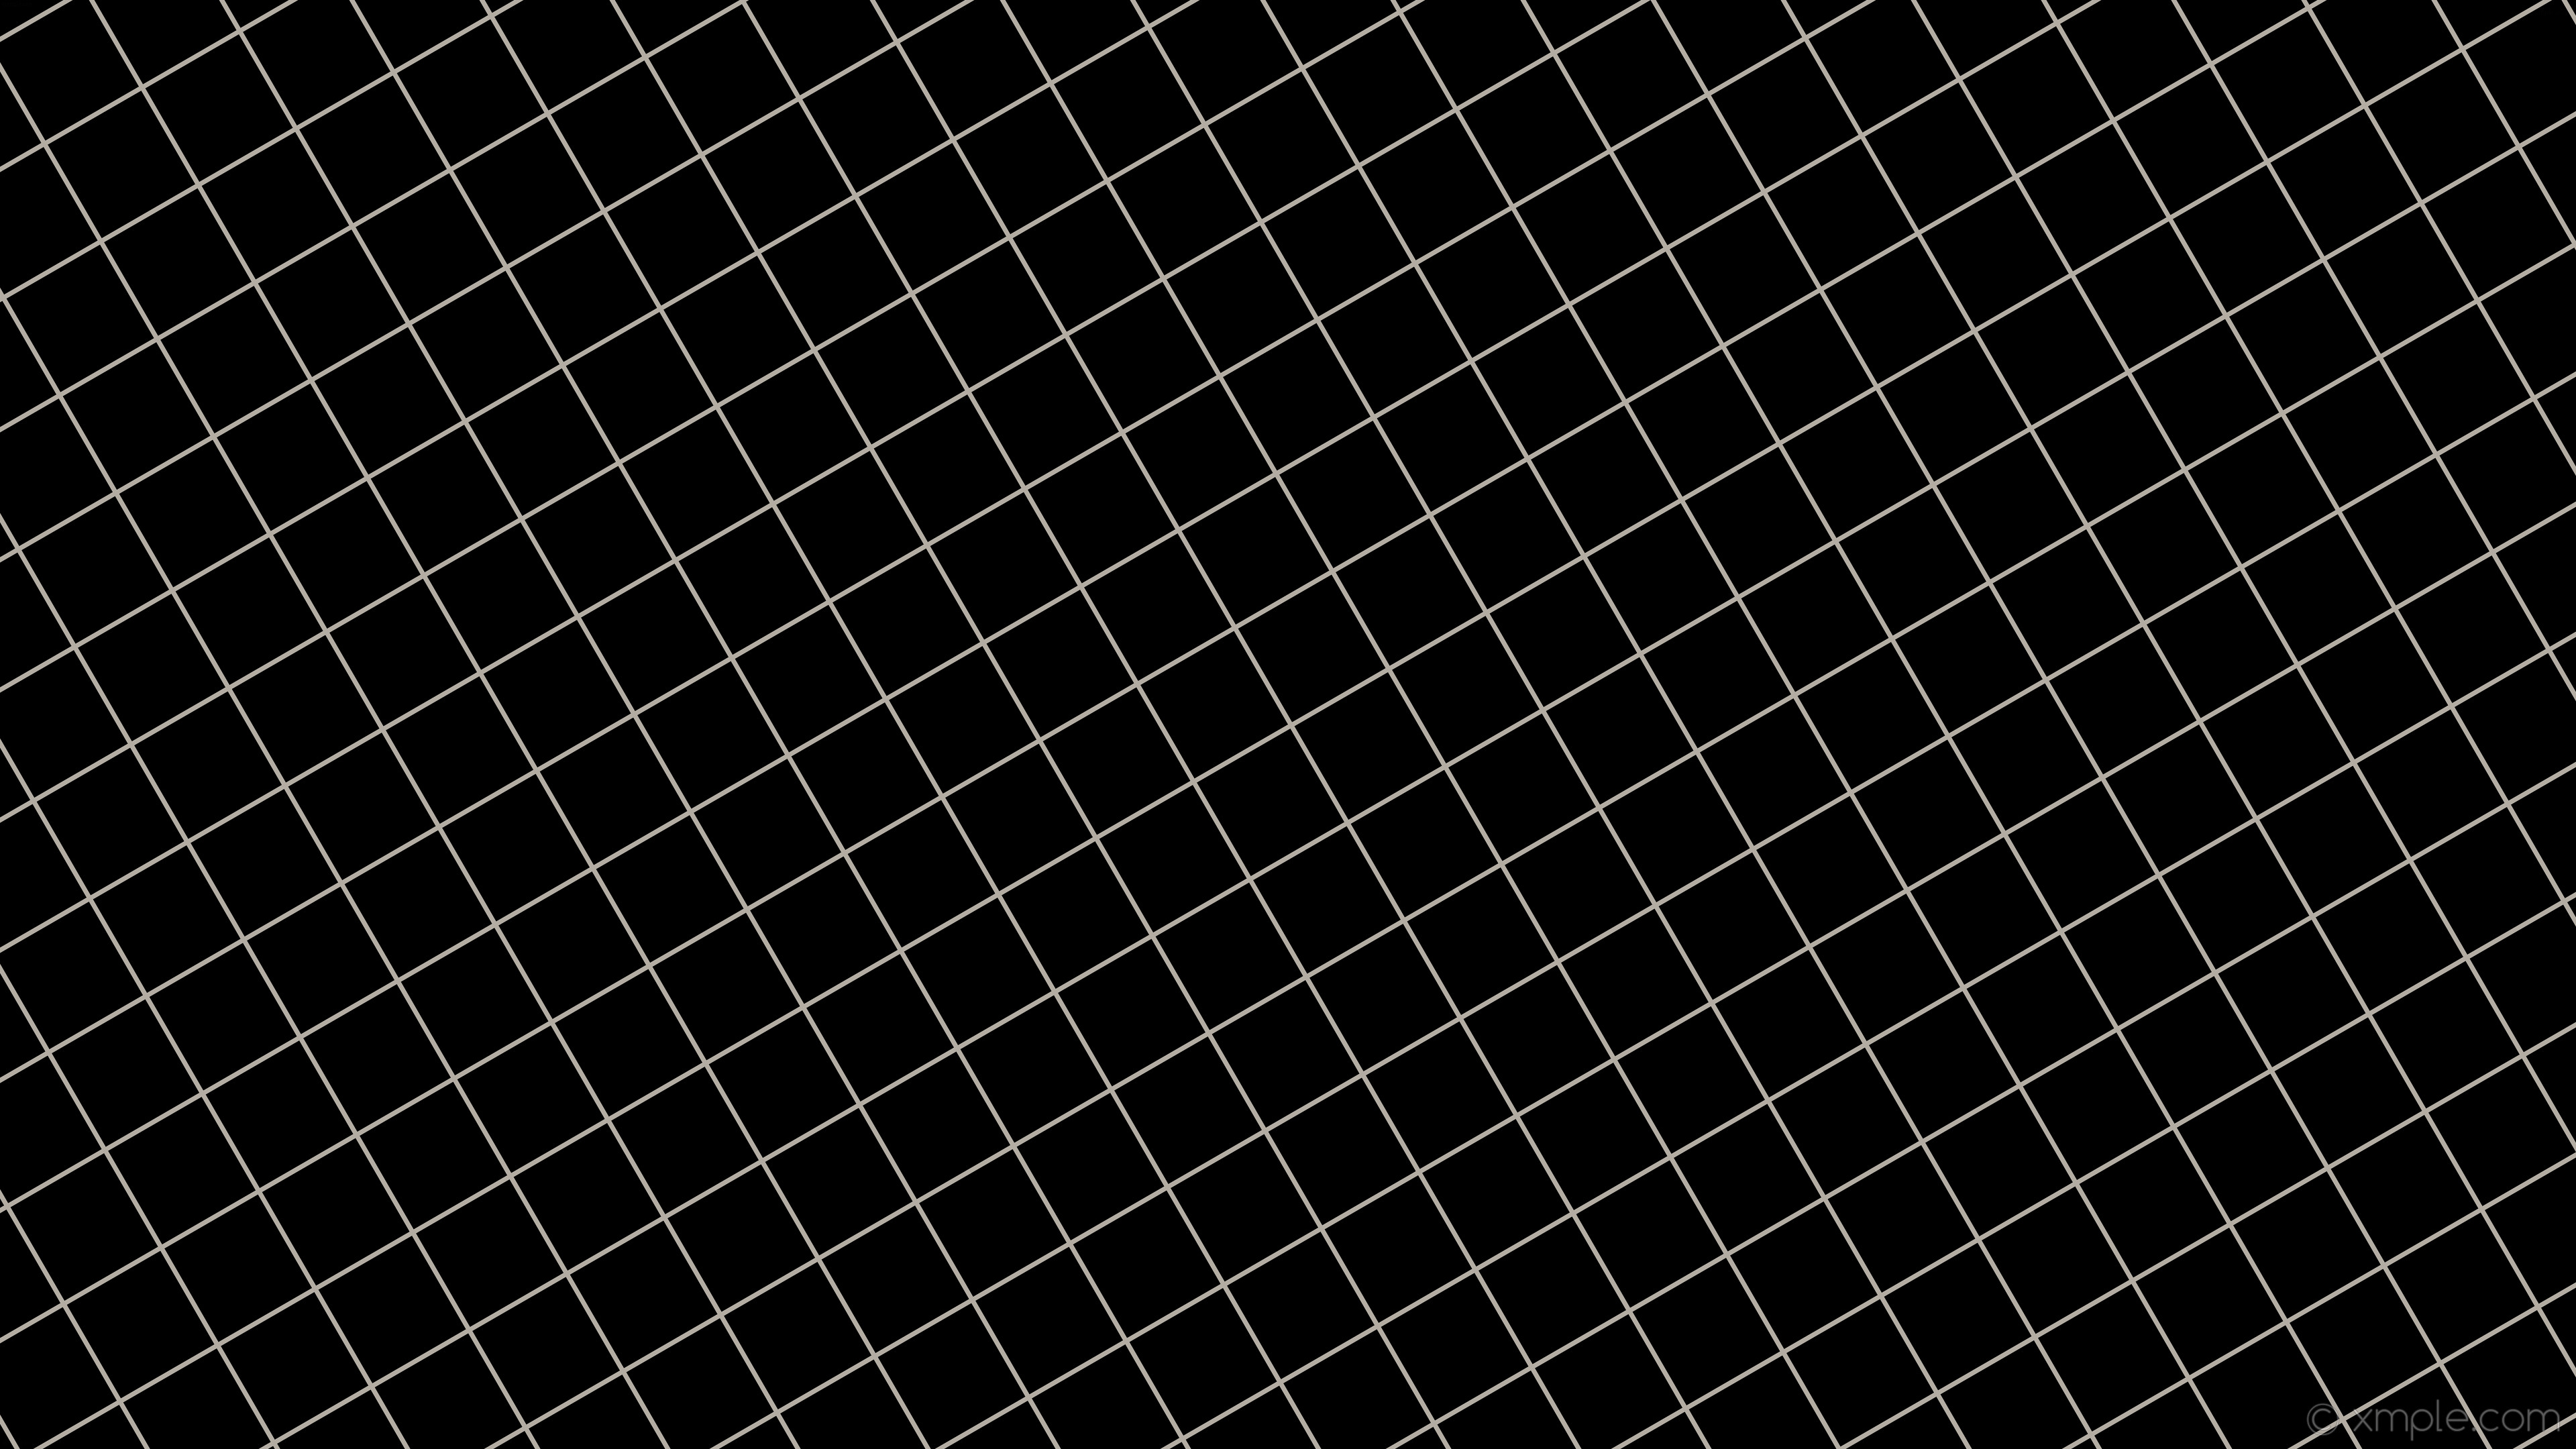 3840x2160 wallpaper graph paper black white grid old lace #000000 #fdf5e6 30Â° 7px  168px